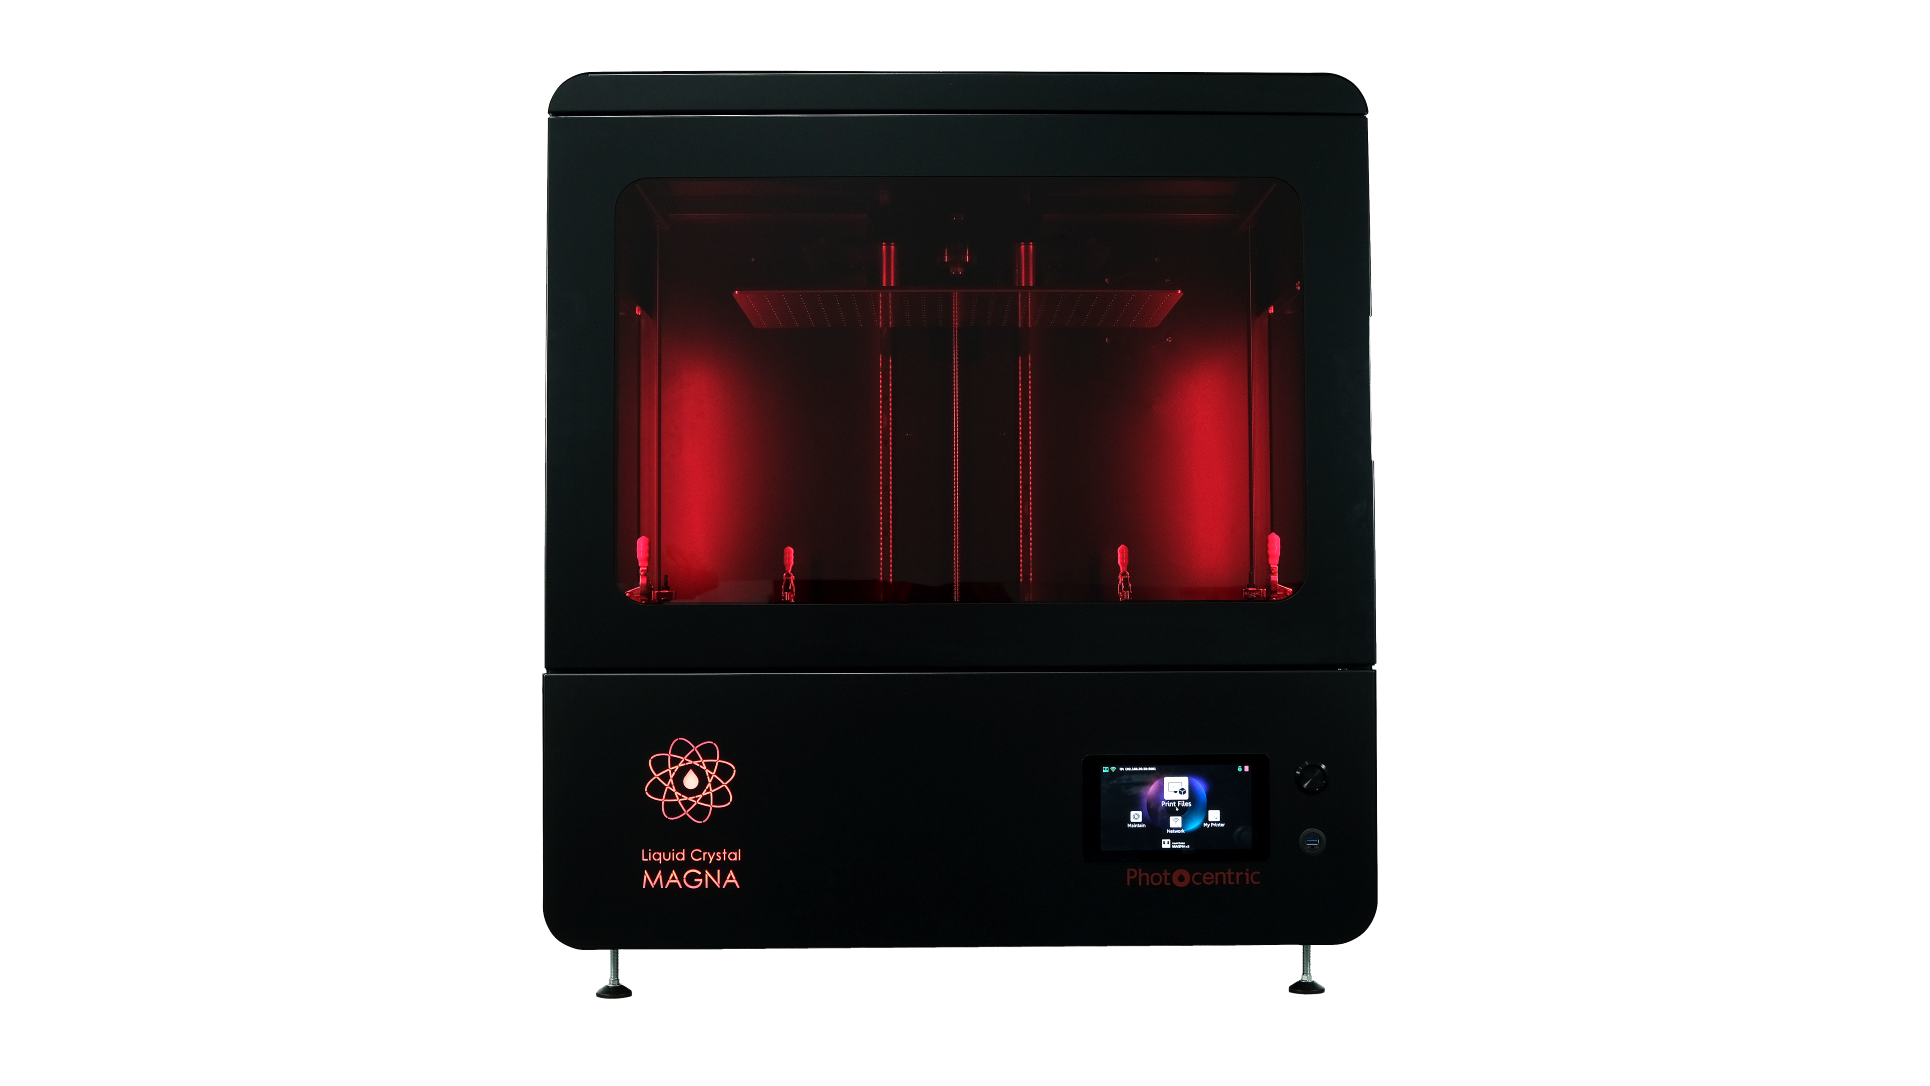 Photocentric’s New Liquid Crystal Magna v.2 Printer Now Available